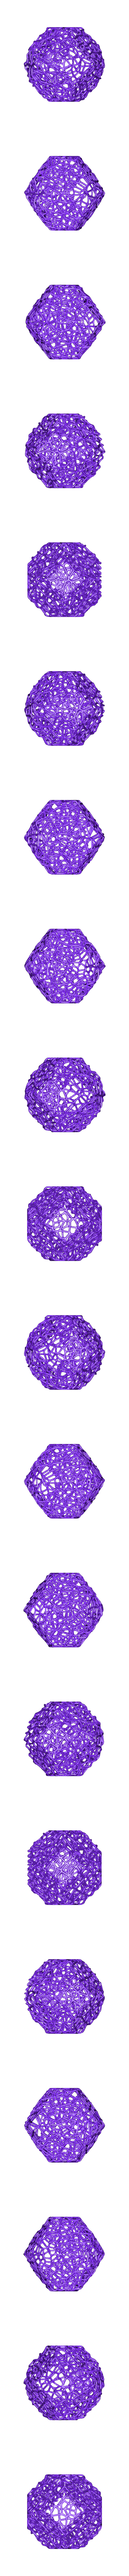 mini_geodesic_dome_planter_voro_simplified.stl Download free STL file voronoi pot • 3D printer model, solunkejagruti